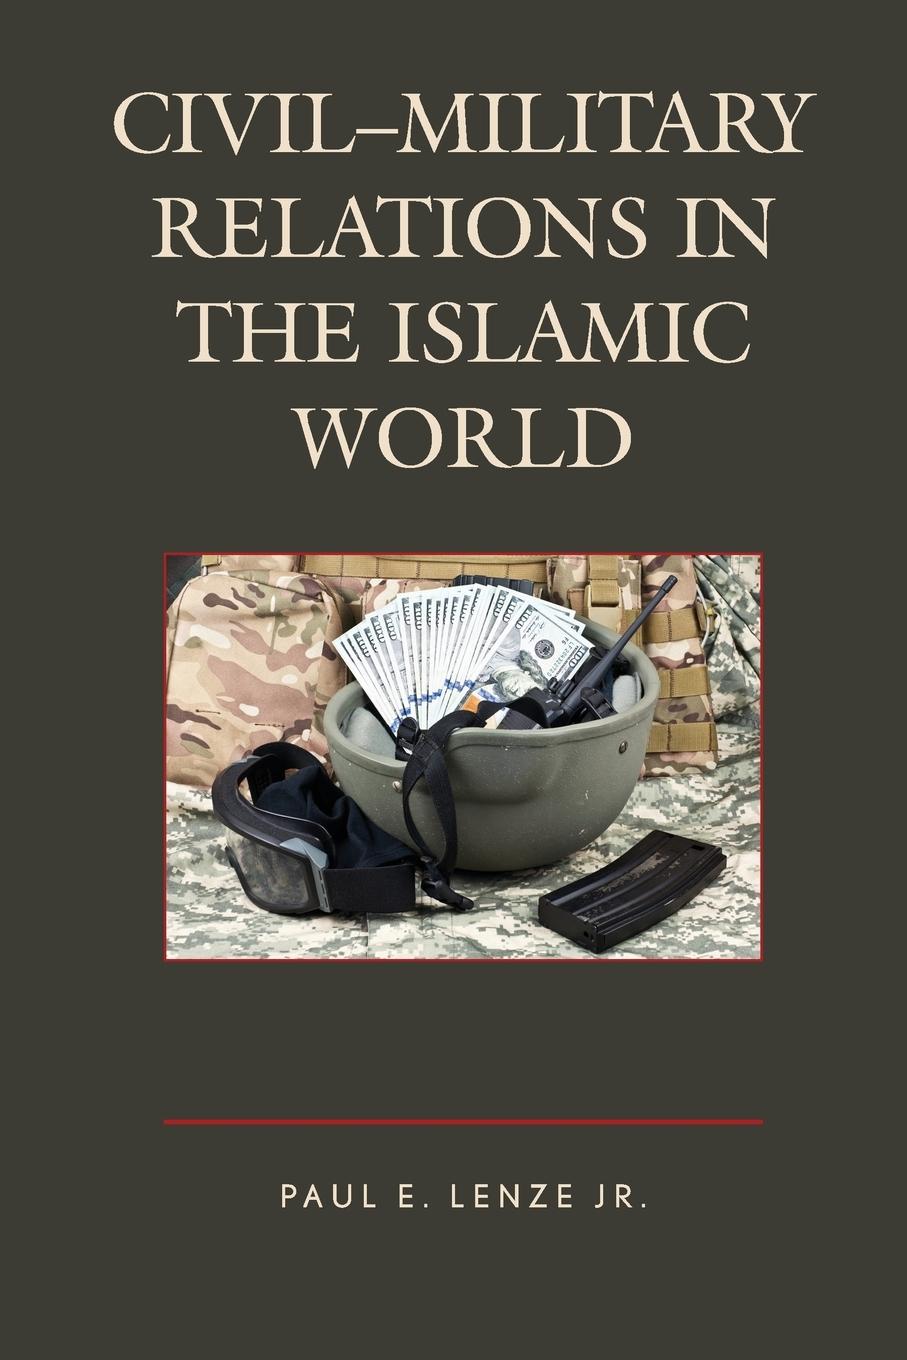 Civil-Military Relations in the Islamic World - Lenze, Jr. Paul E.